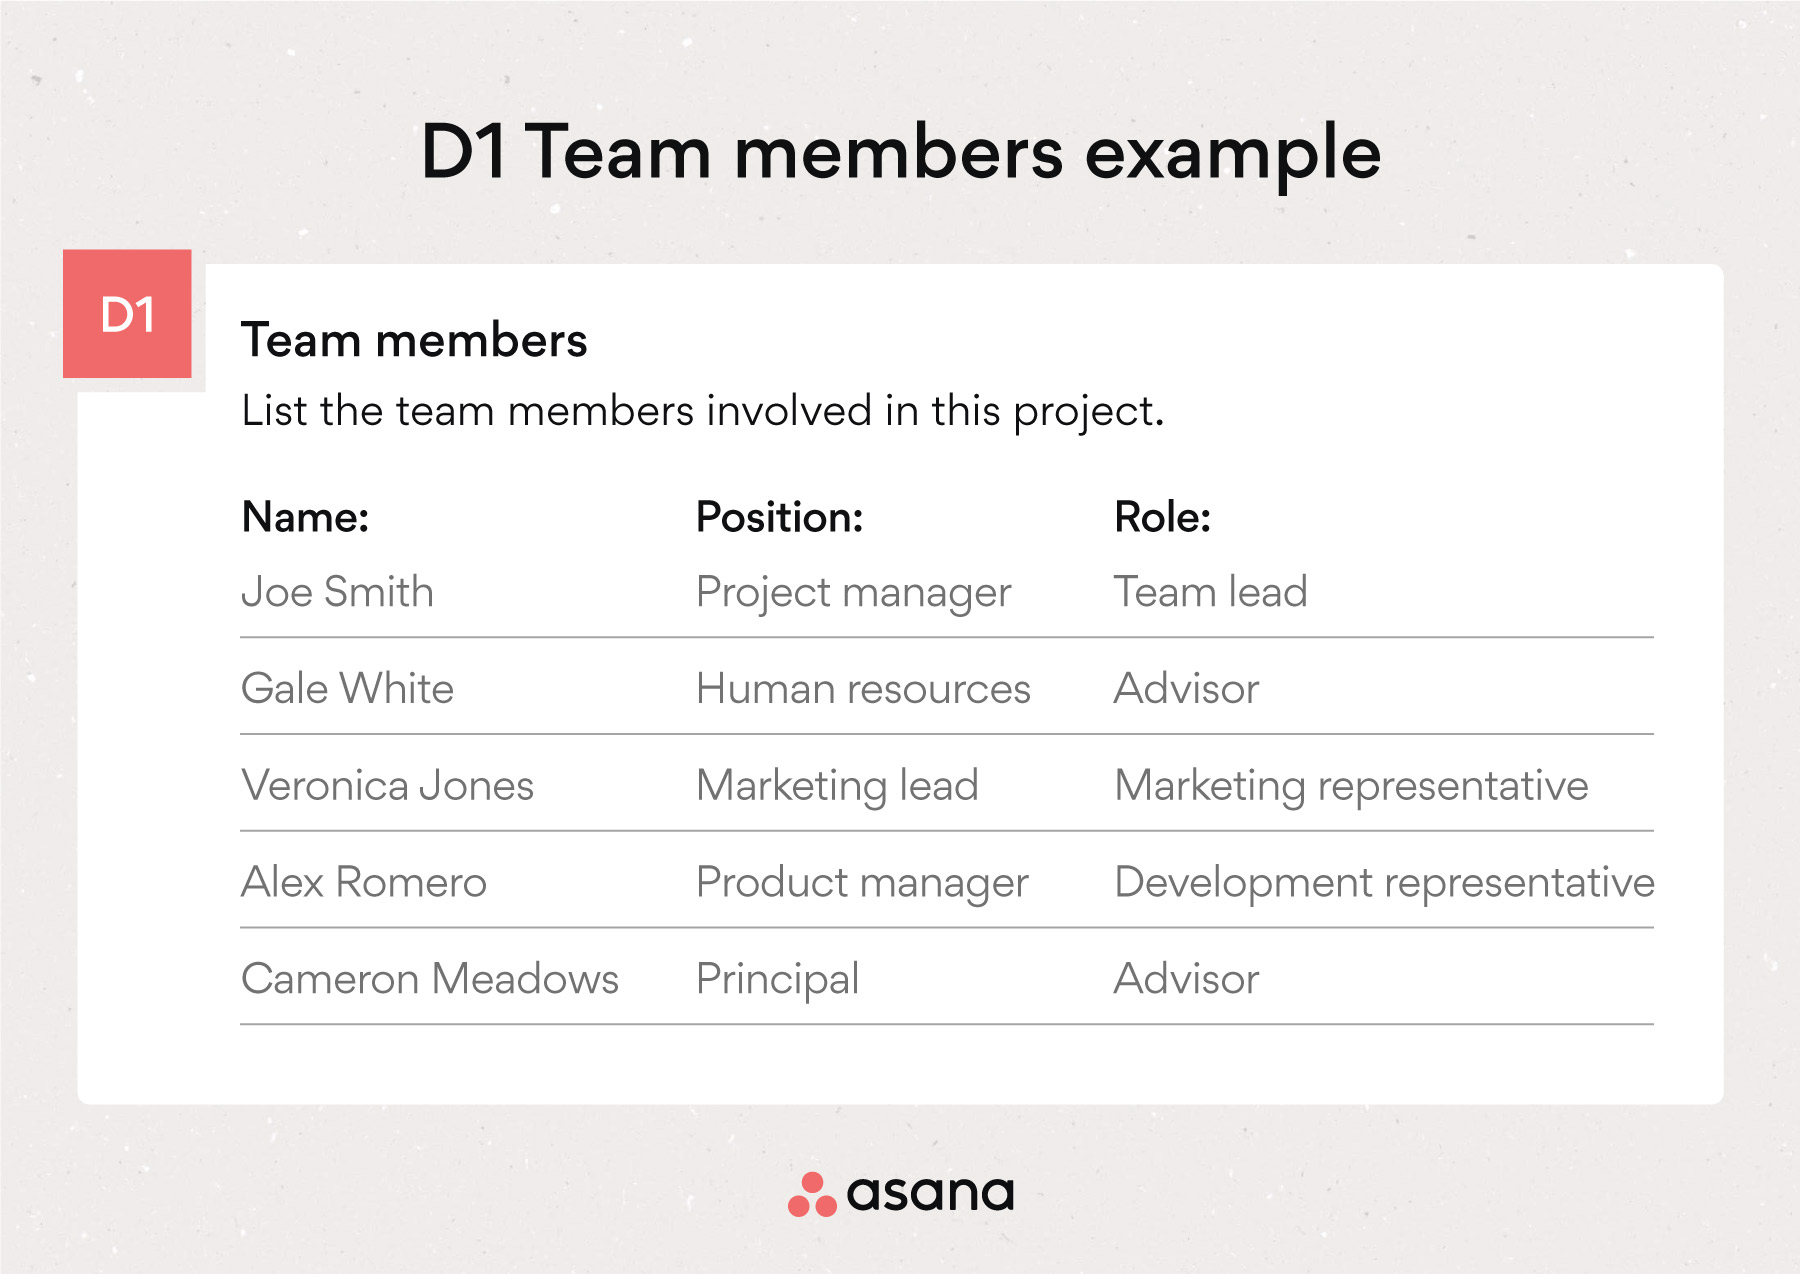 D1 Team members example